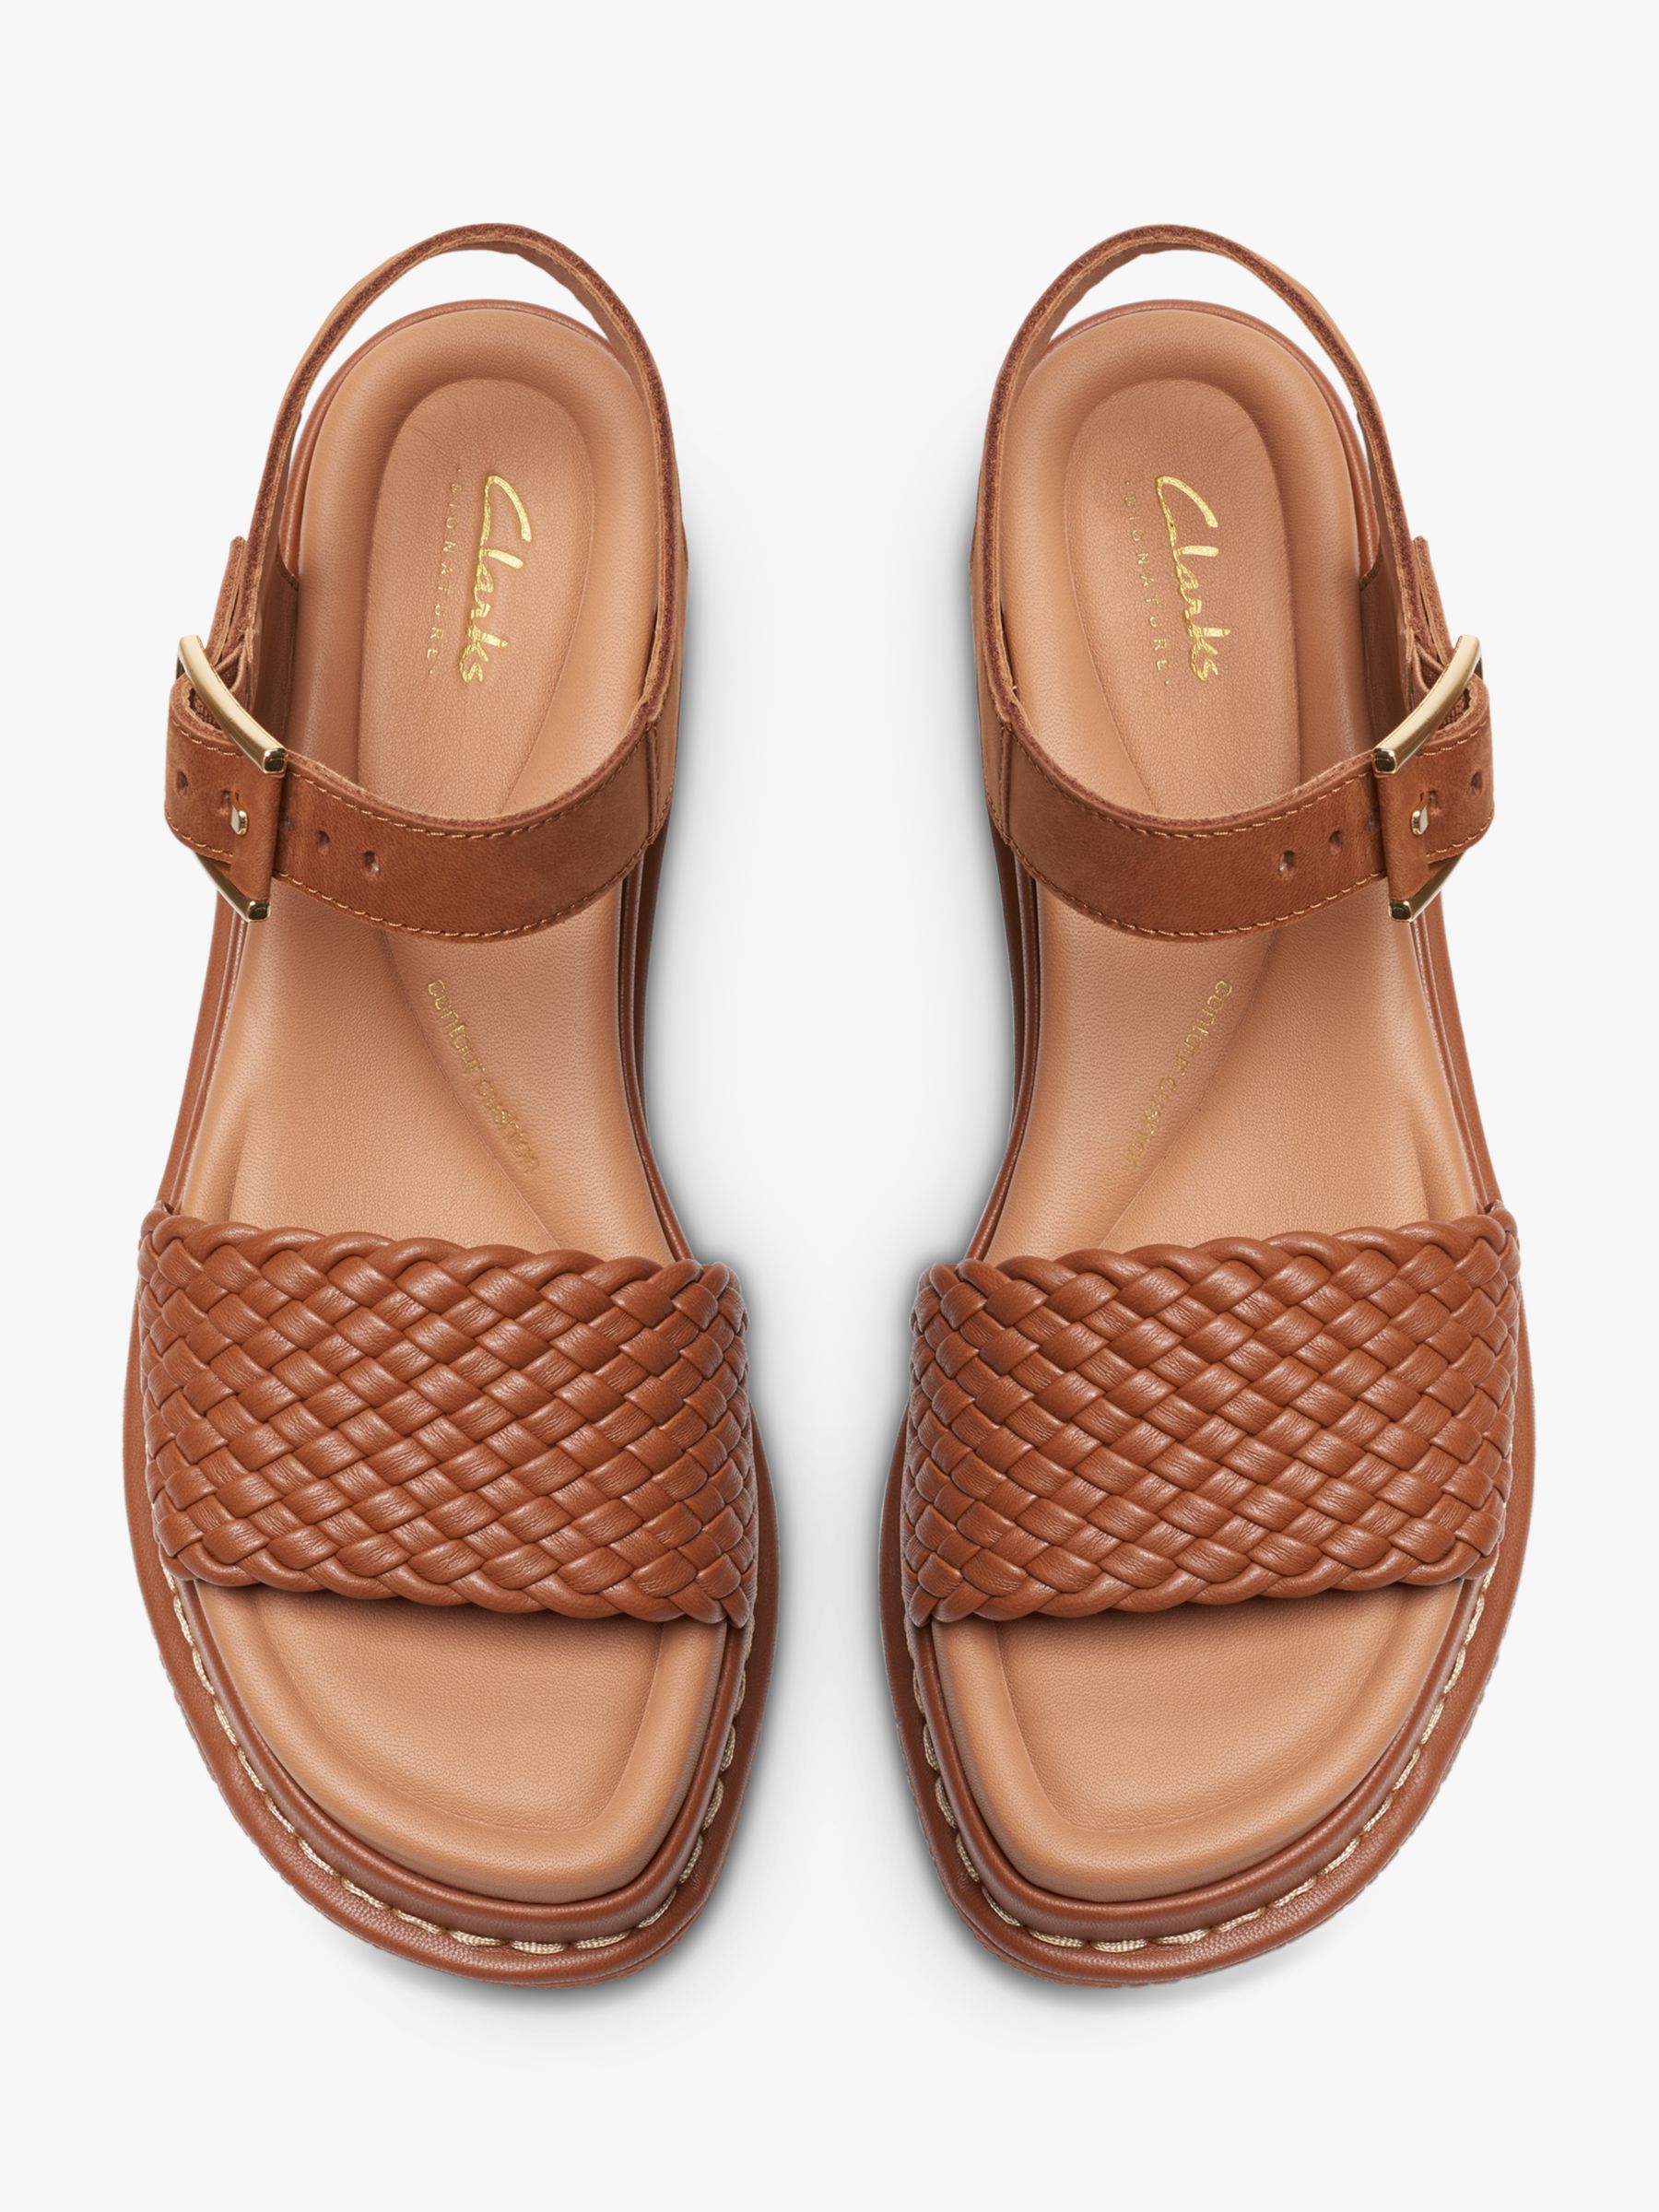 Clarks Kimmei Bay Wedge Sandals, Tan, 3